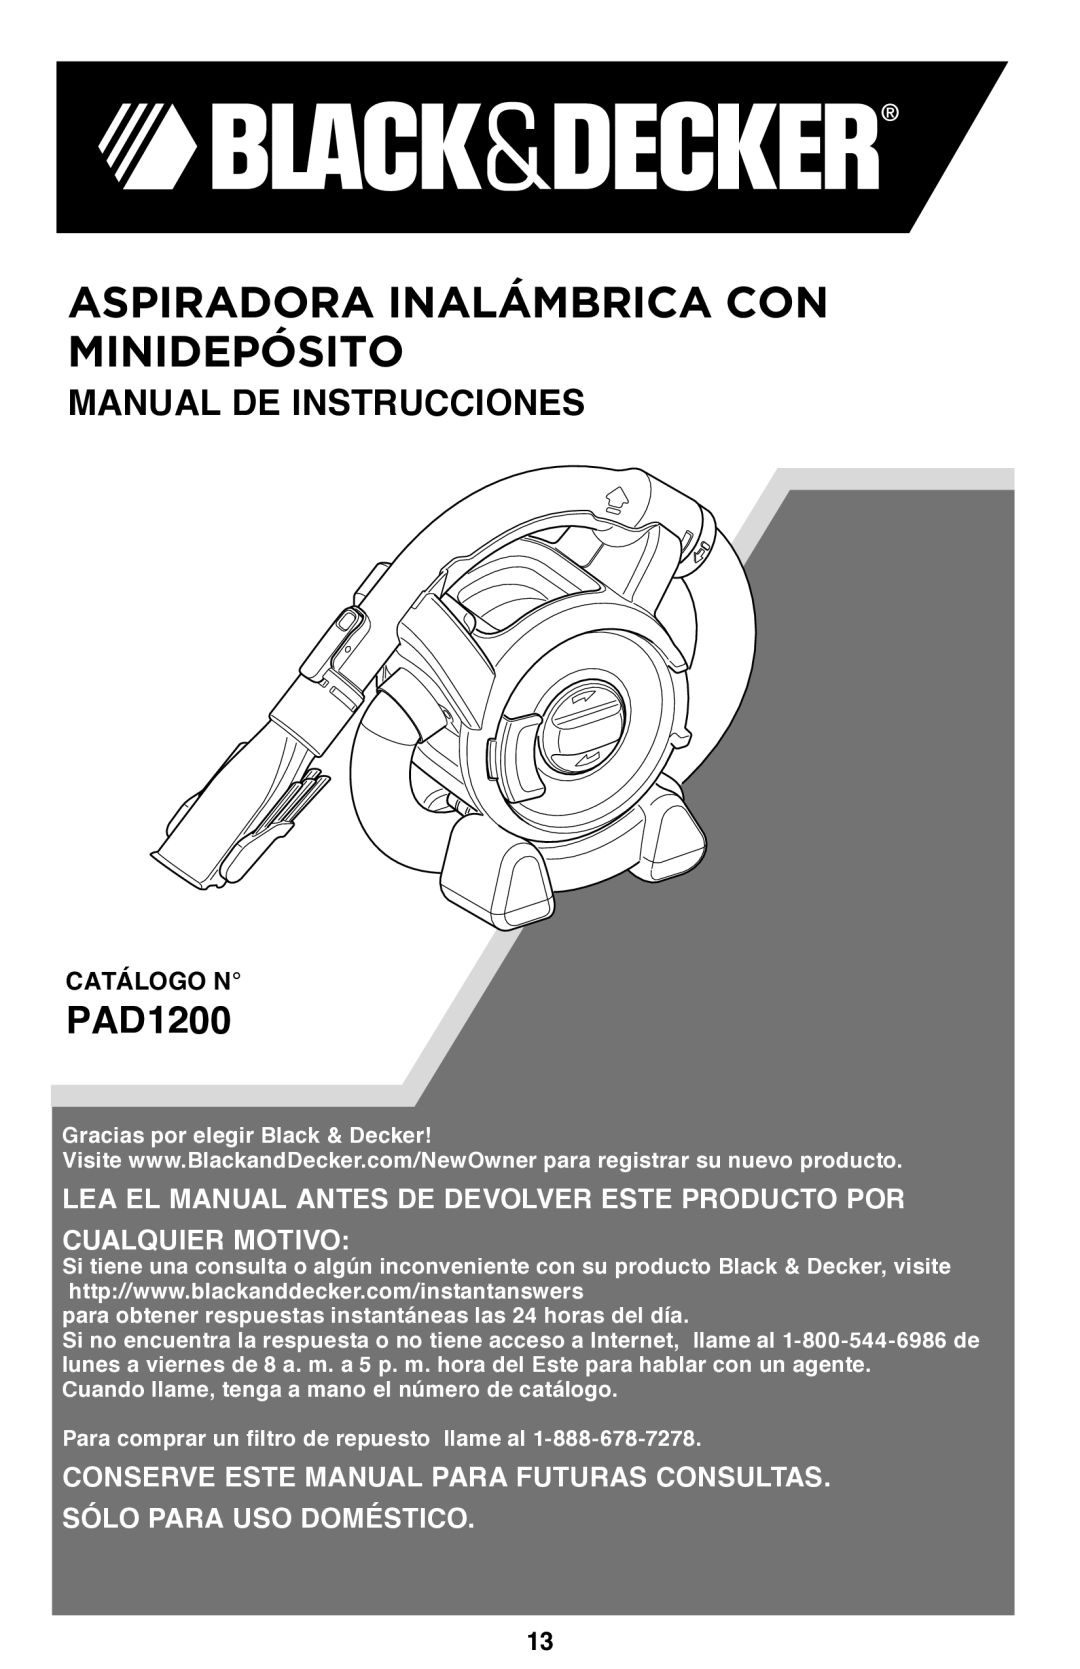 Black & Decker PAD1200 instruction manual Aspiradora inalámbrica con minidepósito 